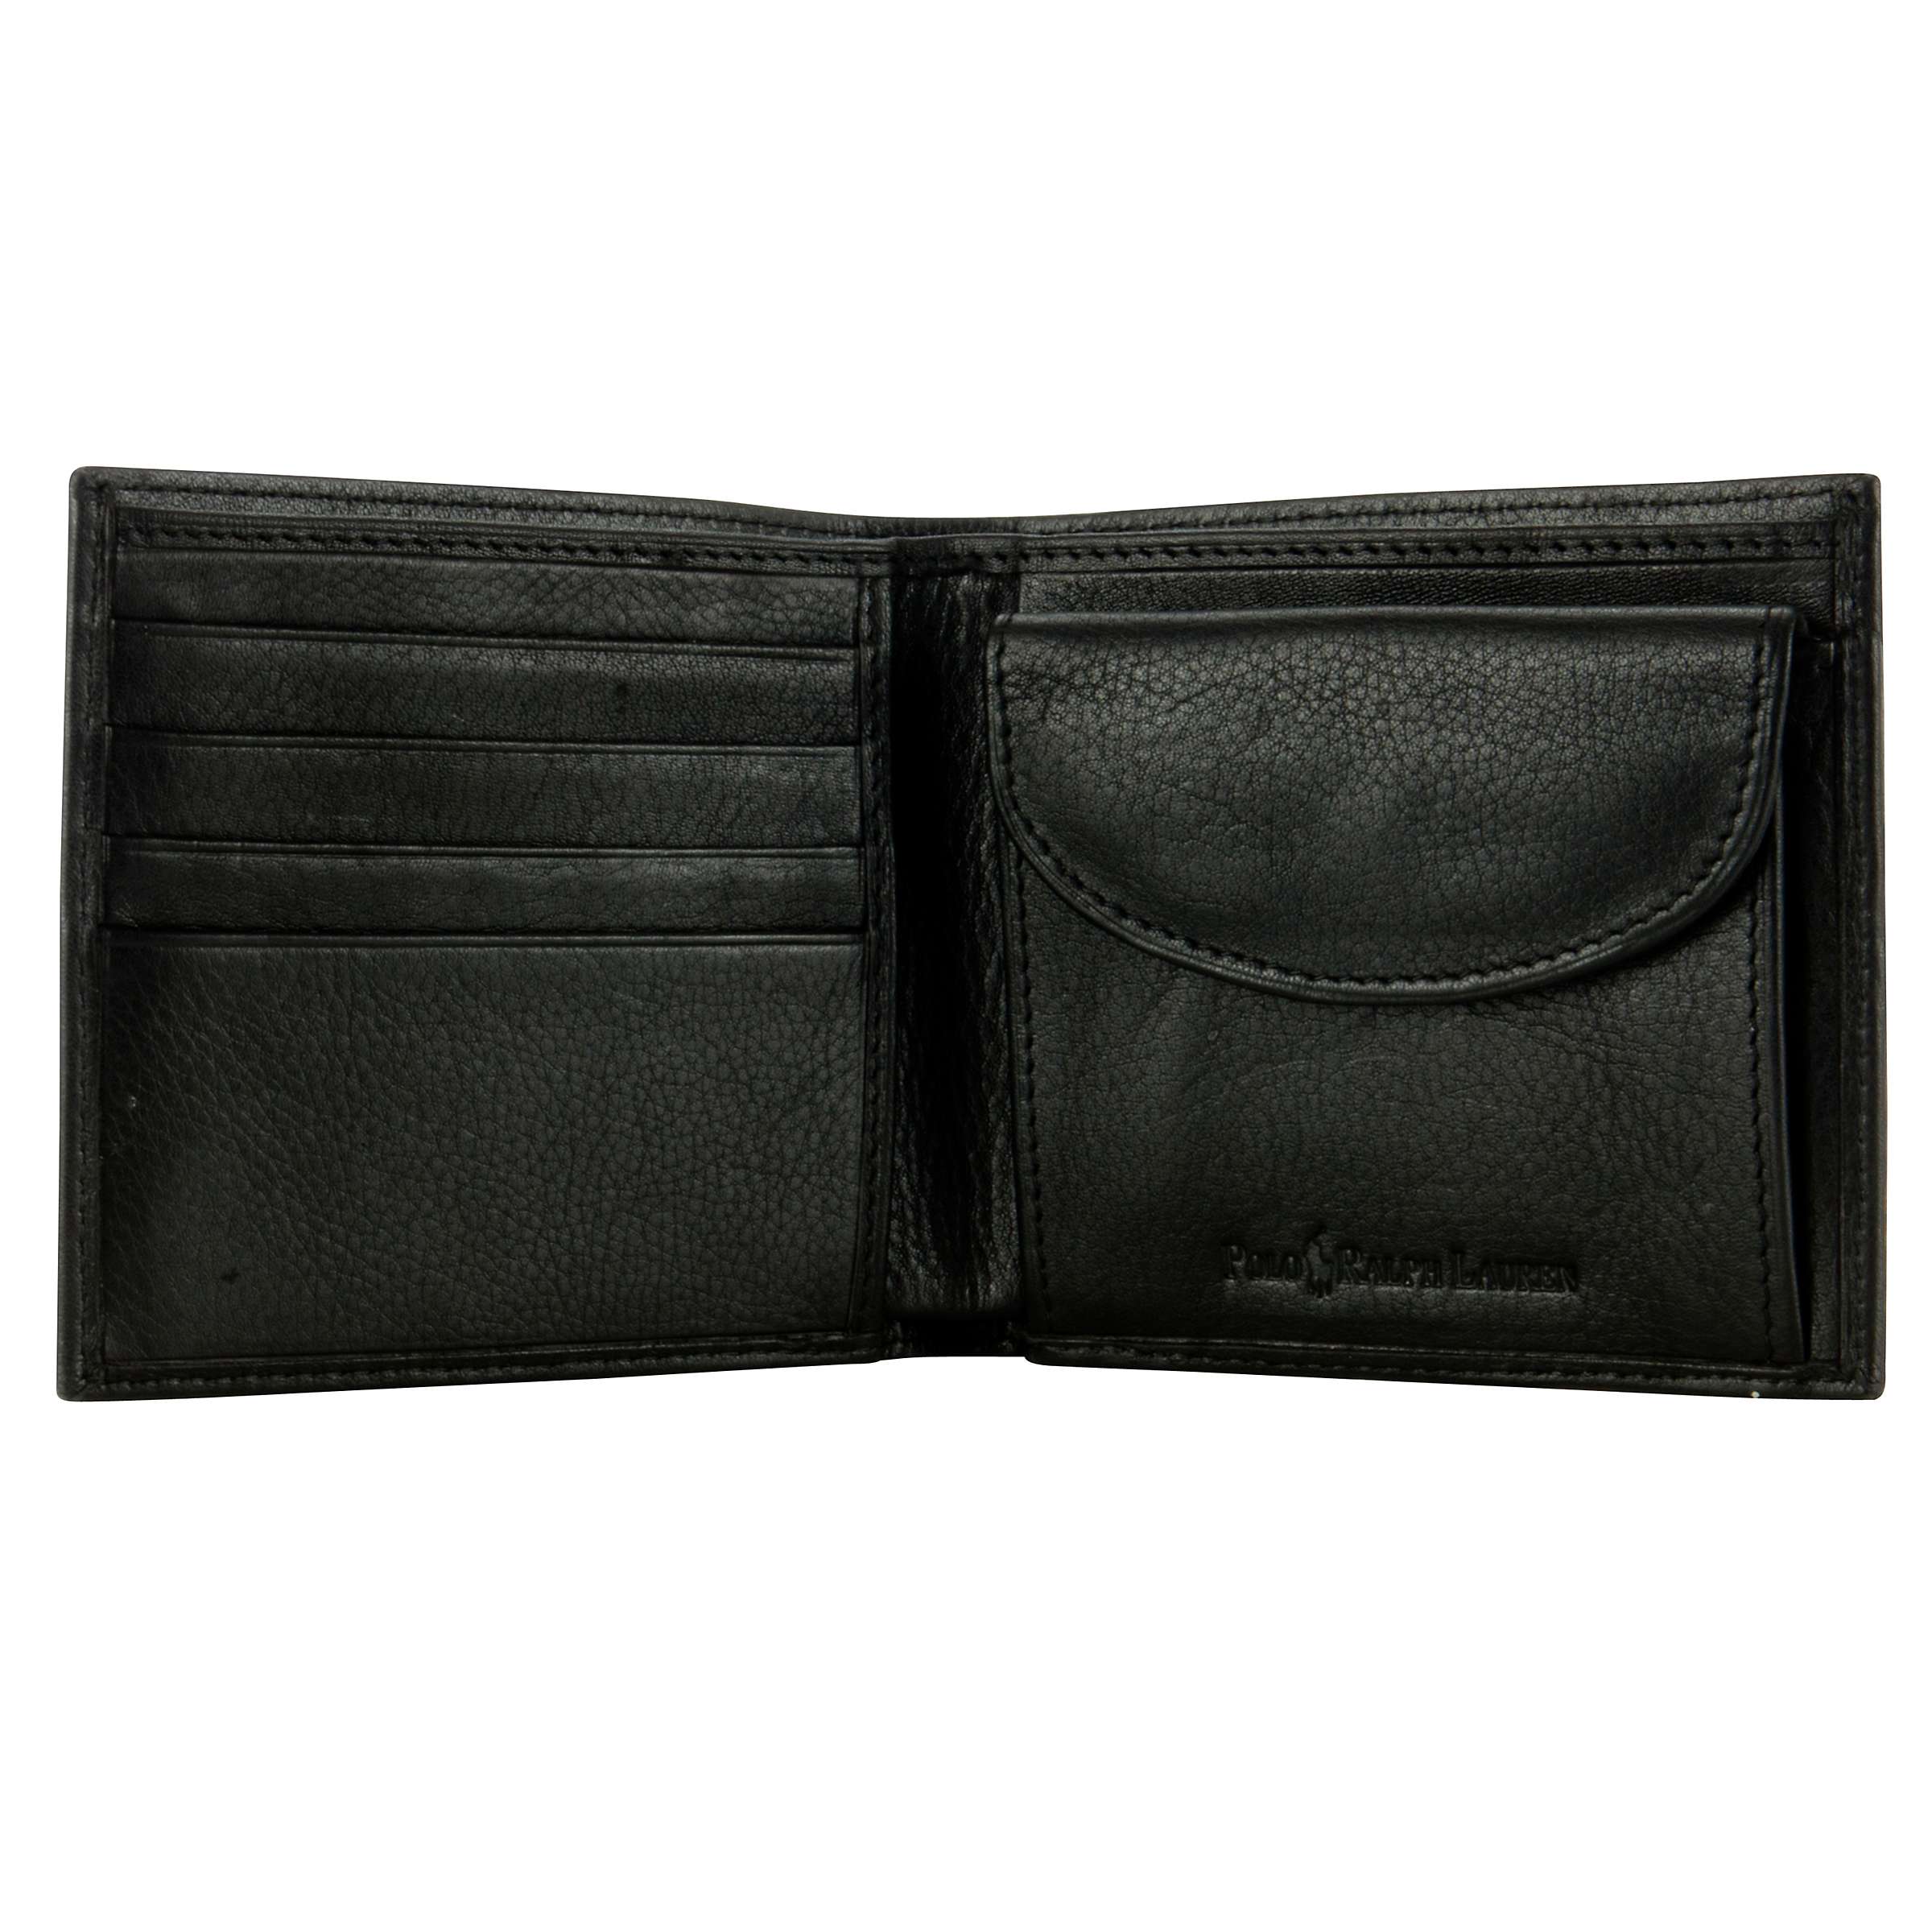 Buy Polo Ralph Lauren Pebble Leather Wallet Online at johnlewis.com